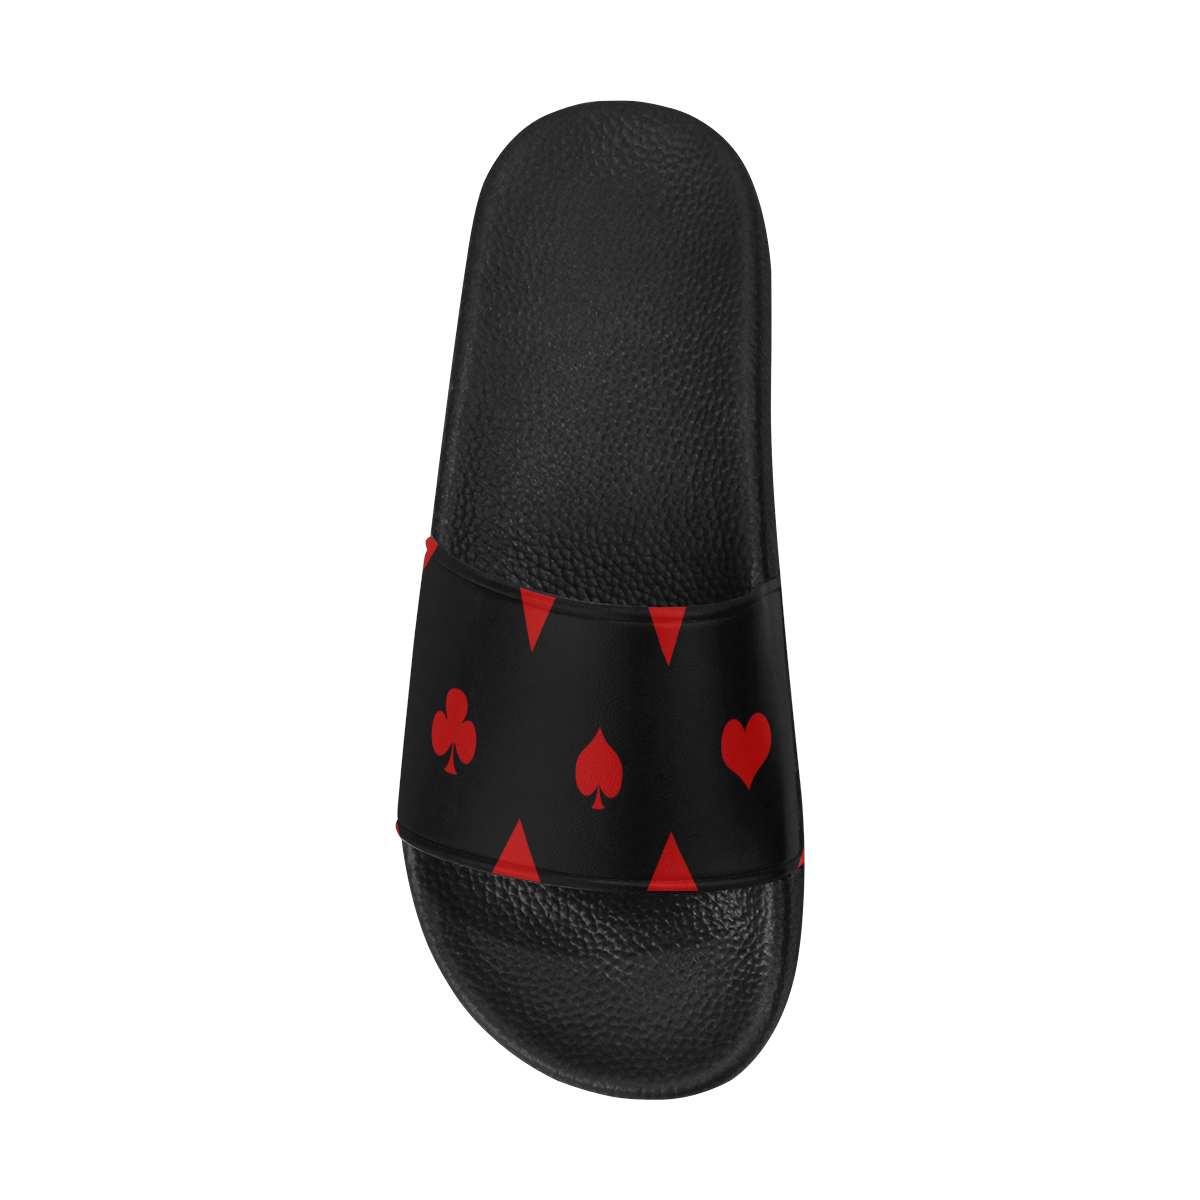 Las Vegas Black Red Play Card Shapes Women's Slide Sandals (Model 057)